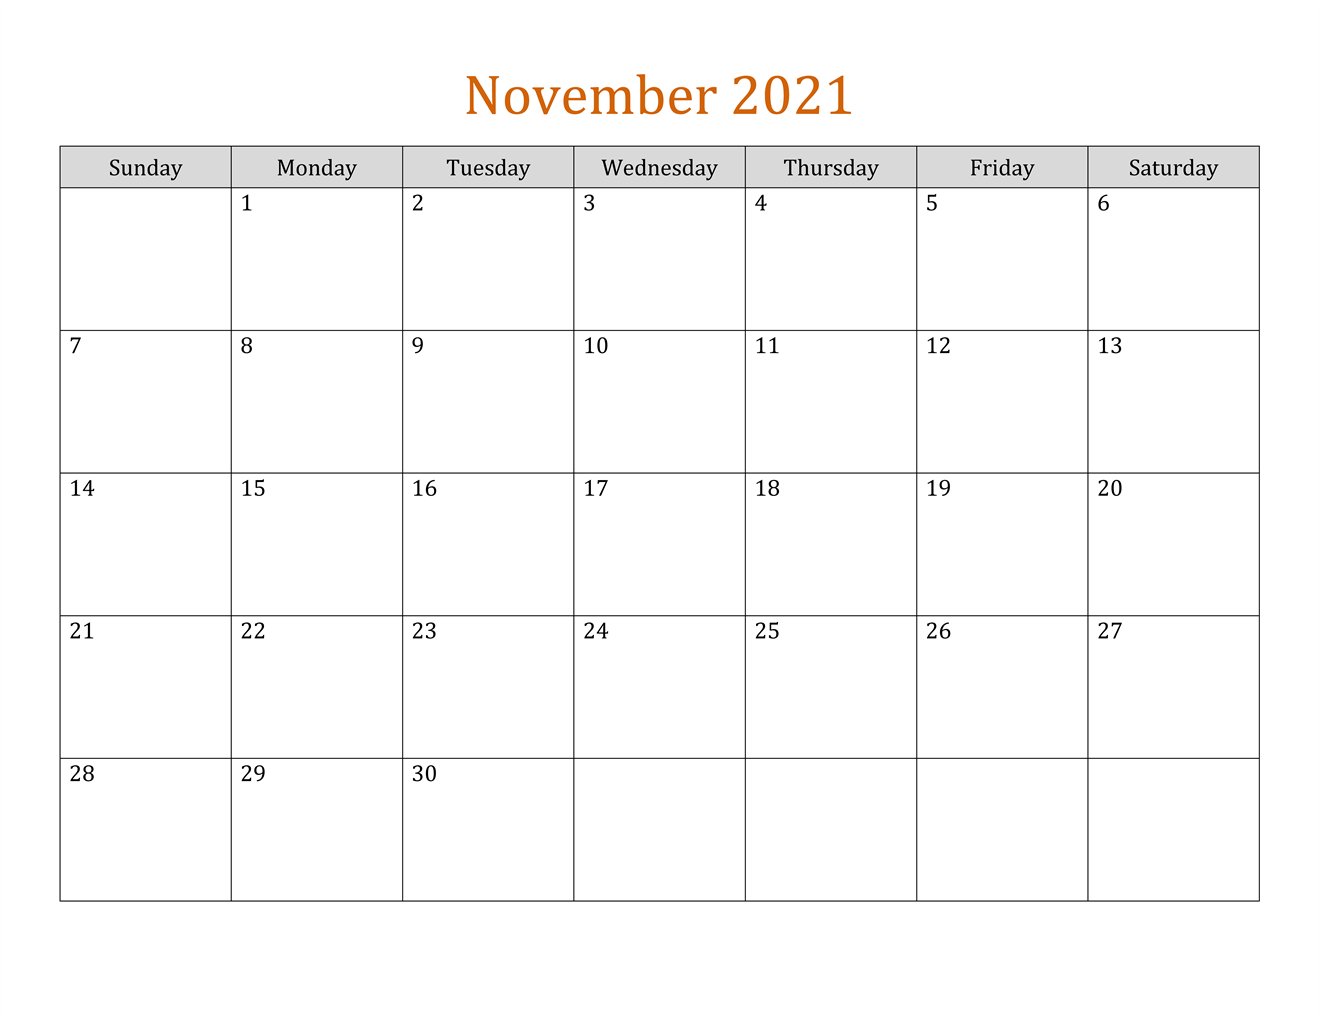 November 2021 Calendar With Holidays